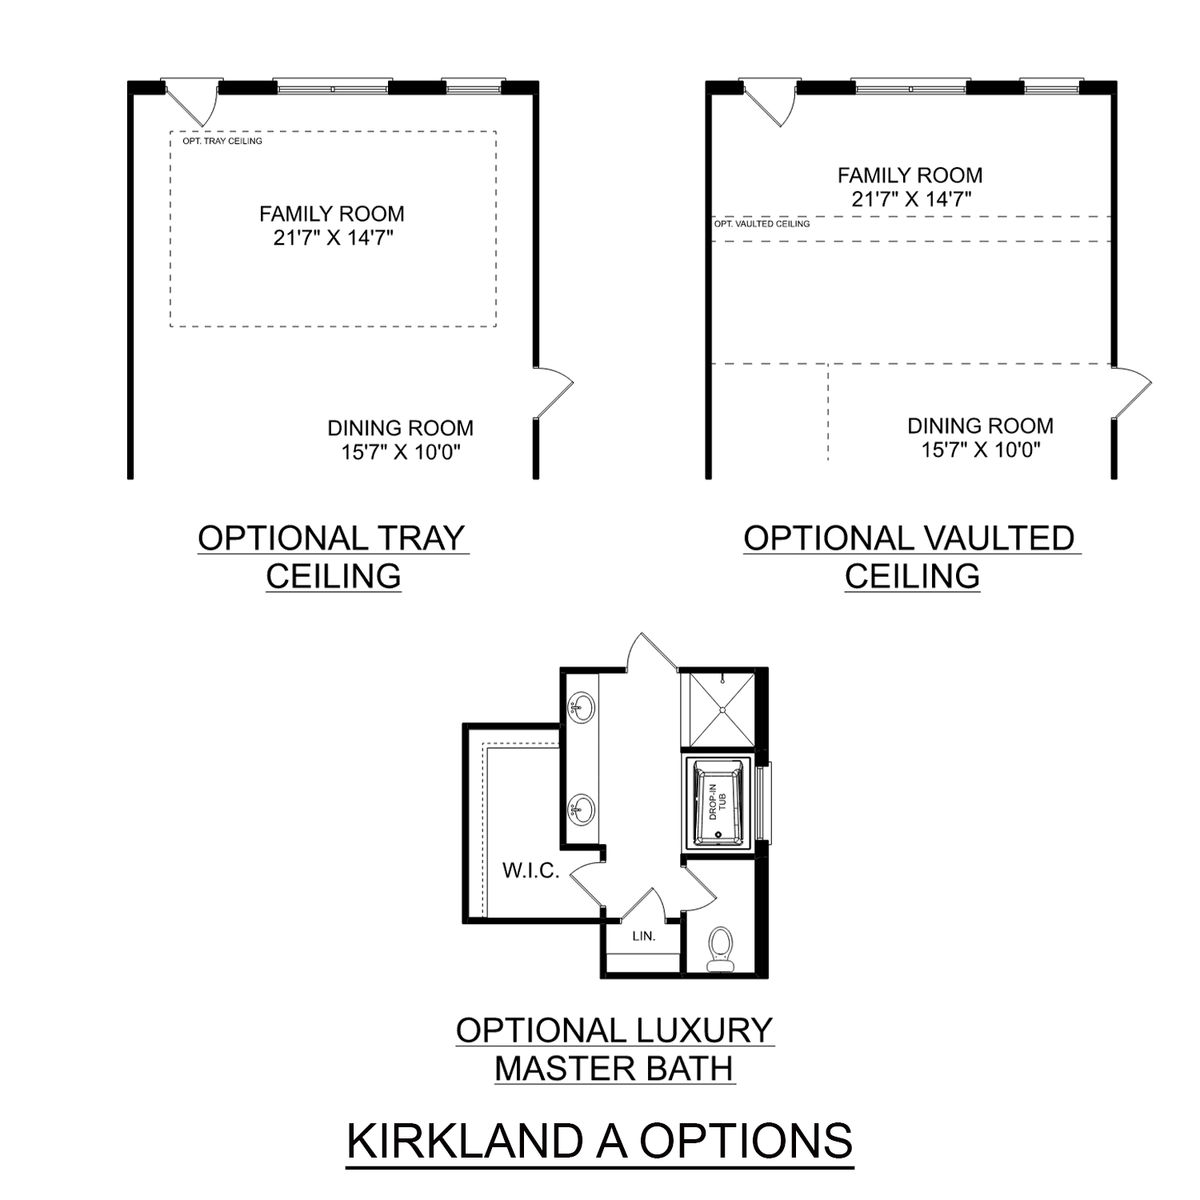 2 - The Kirkland floor plan layout for 2106 Brandon Drive in Davidson Homes' North Ridge community.